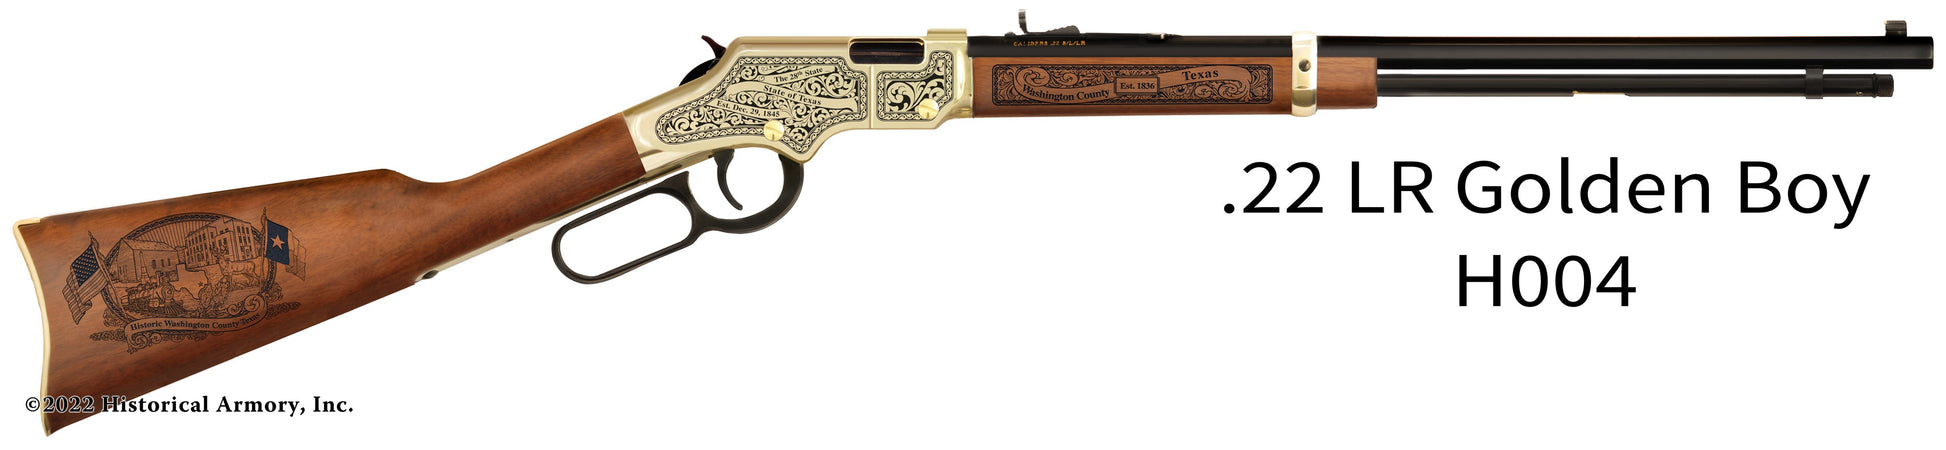 Washington County Texas History Engraved  Rifle Henry Golden Boy .22 | Historical Armory